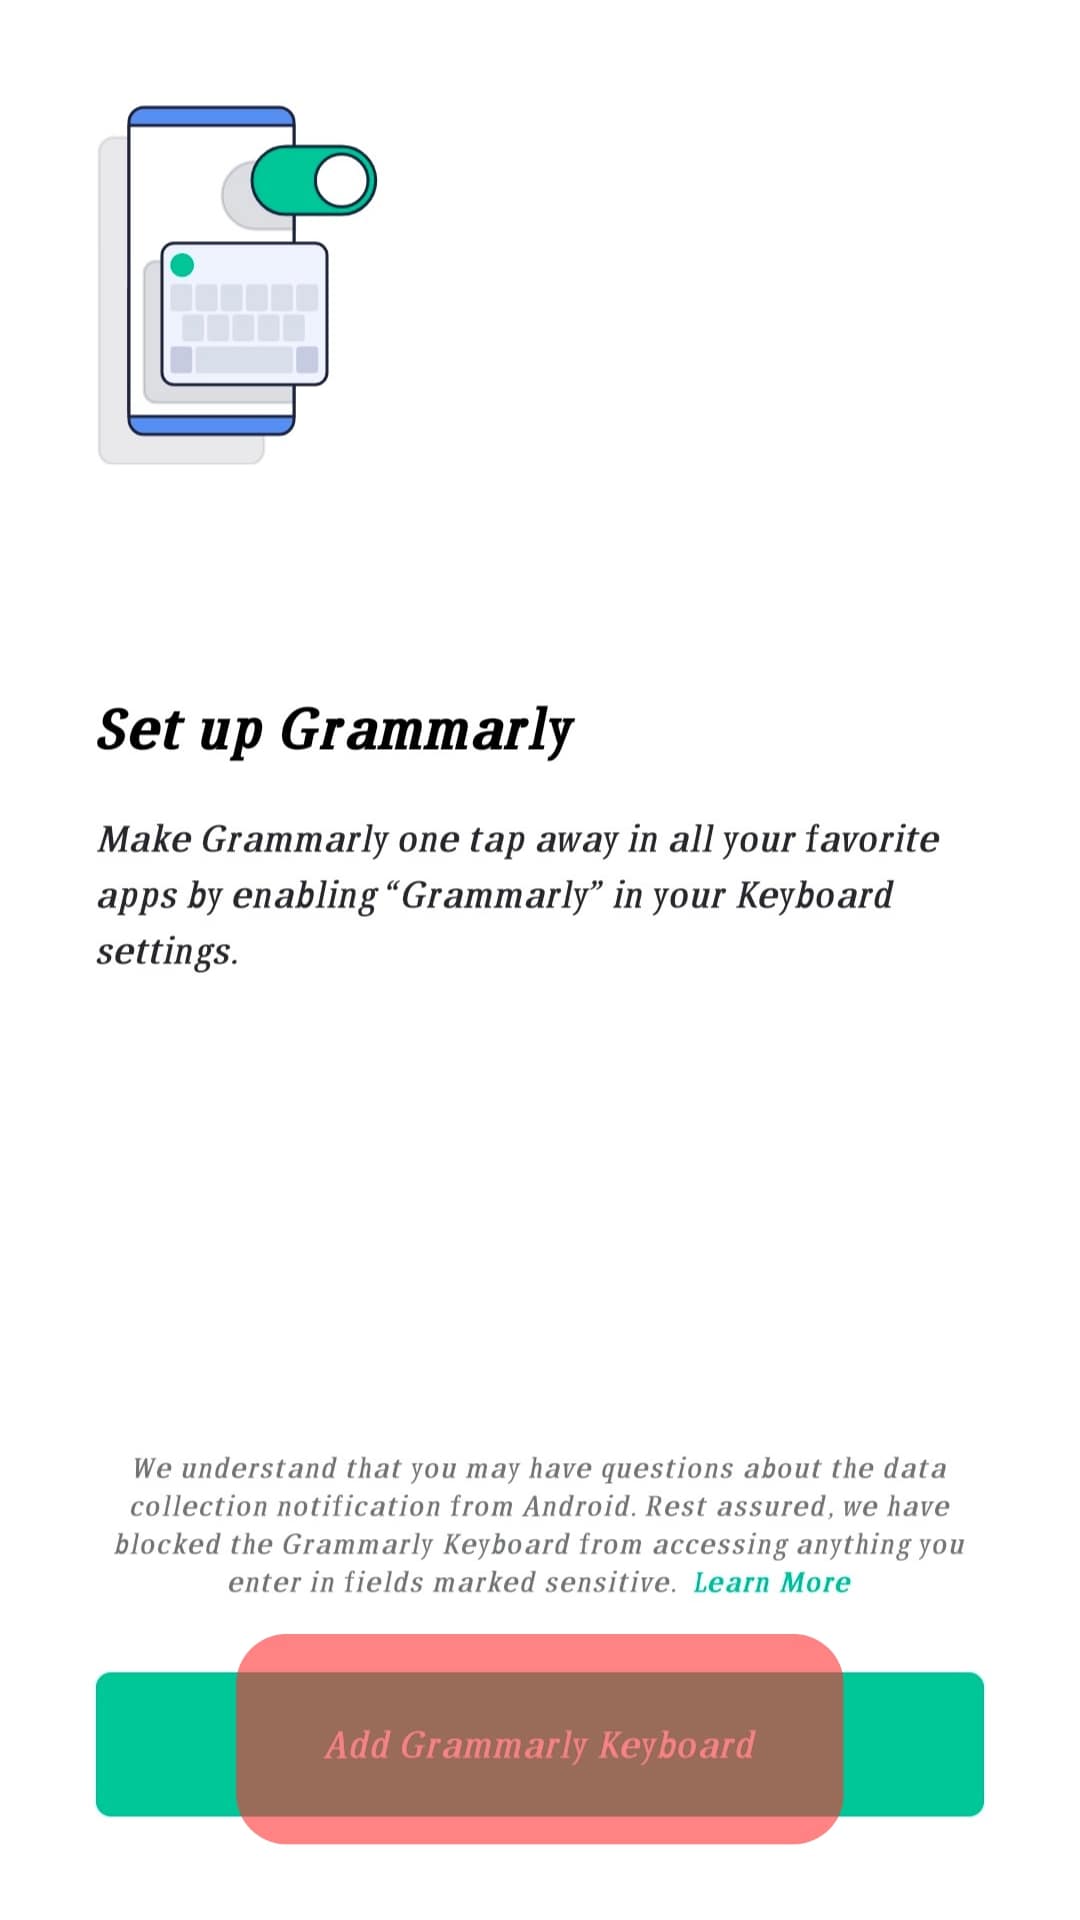 Click Add Grammarly Keyboard